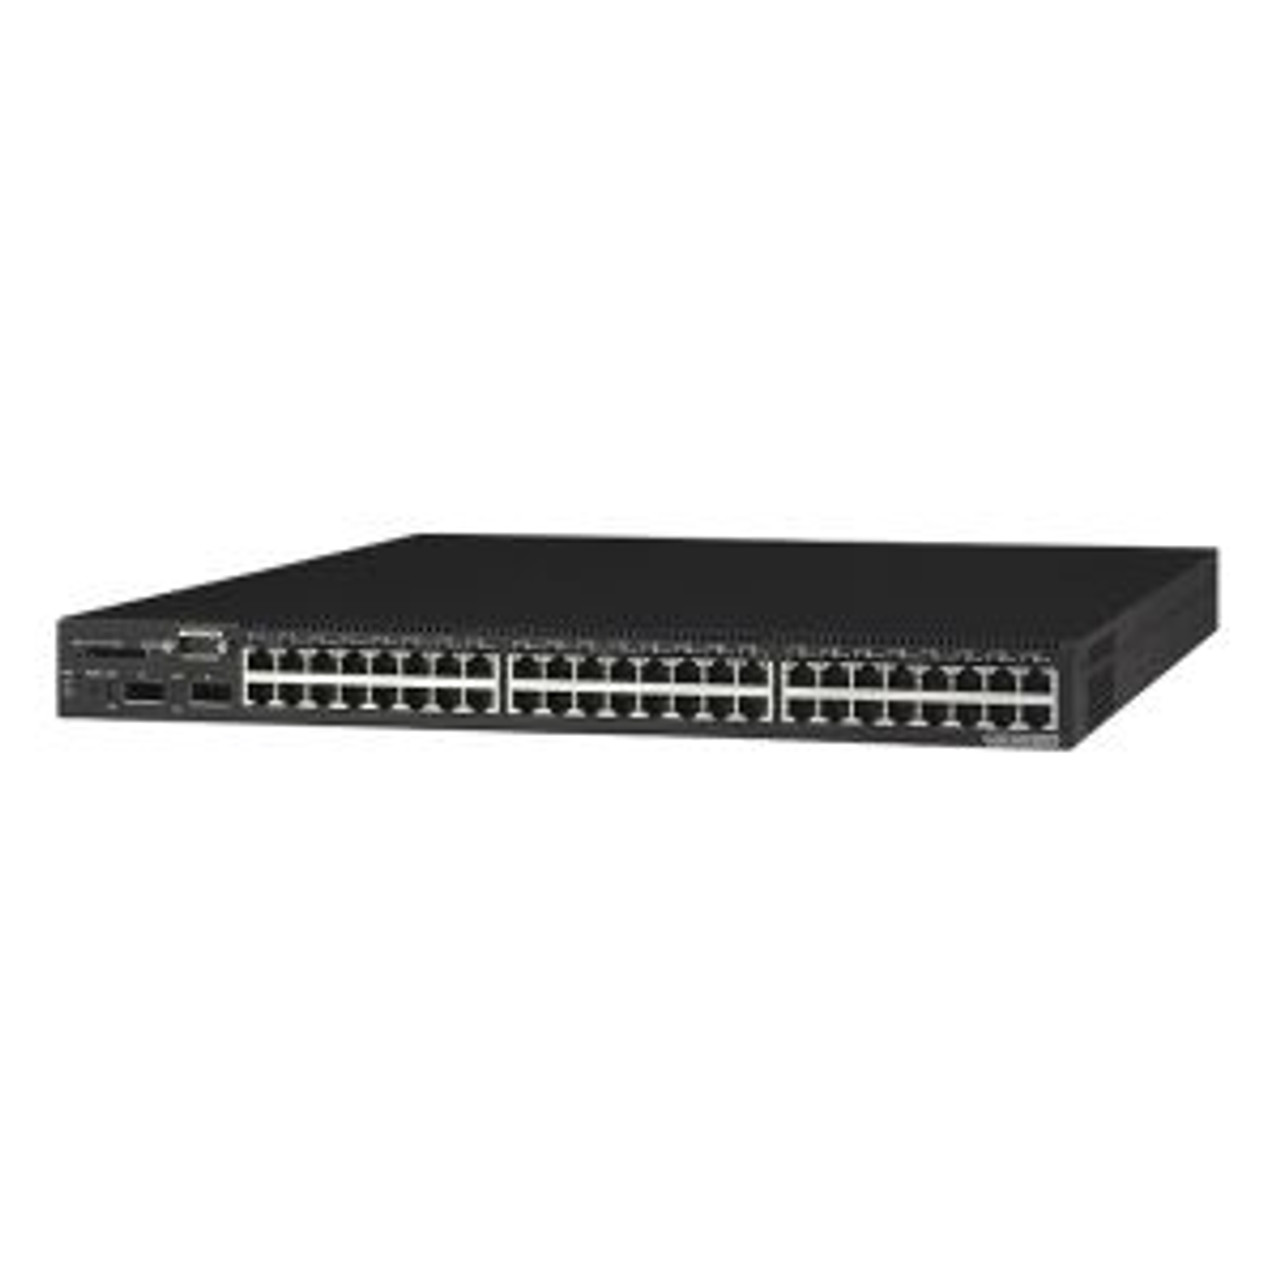 11502 | Extreme | Summit5iTX Layer 3 Managed Switch 12 x 10/100/1000Base-T LAN 4 x GBIC Layer 3 Switch